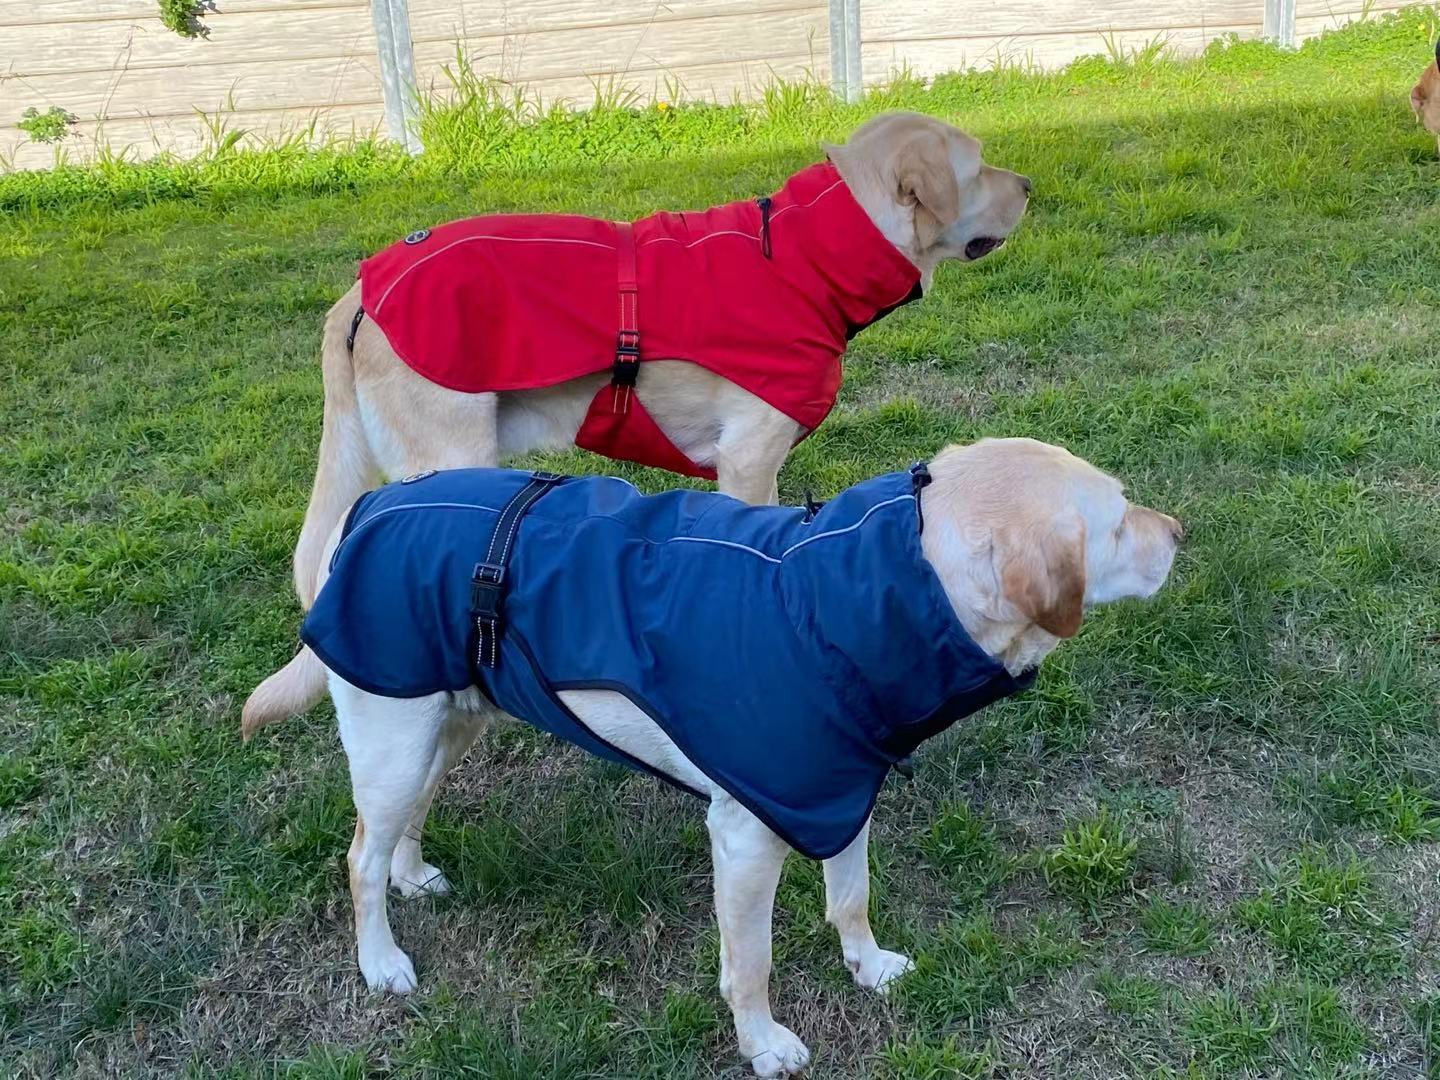 Pet Dog Raincoat Poncho Jacket Windbreaker Waterproof Clothes with Harness Hole-L-Blue